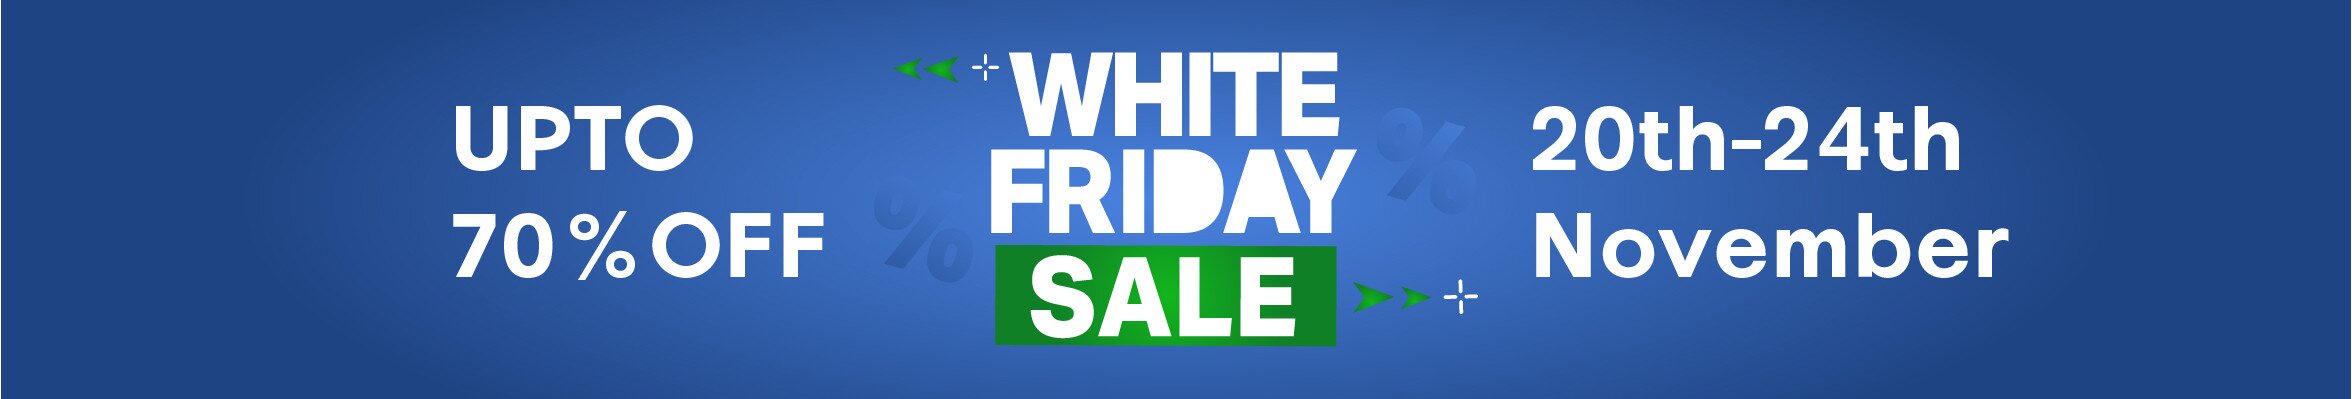 White Friday Sale